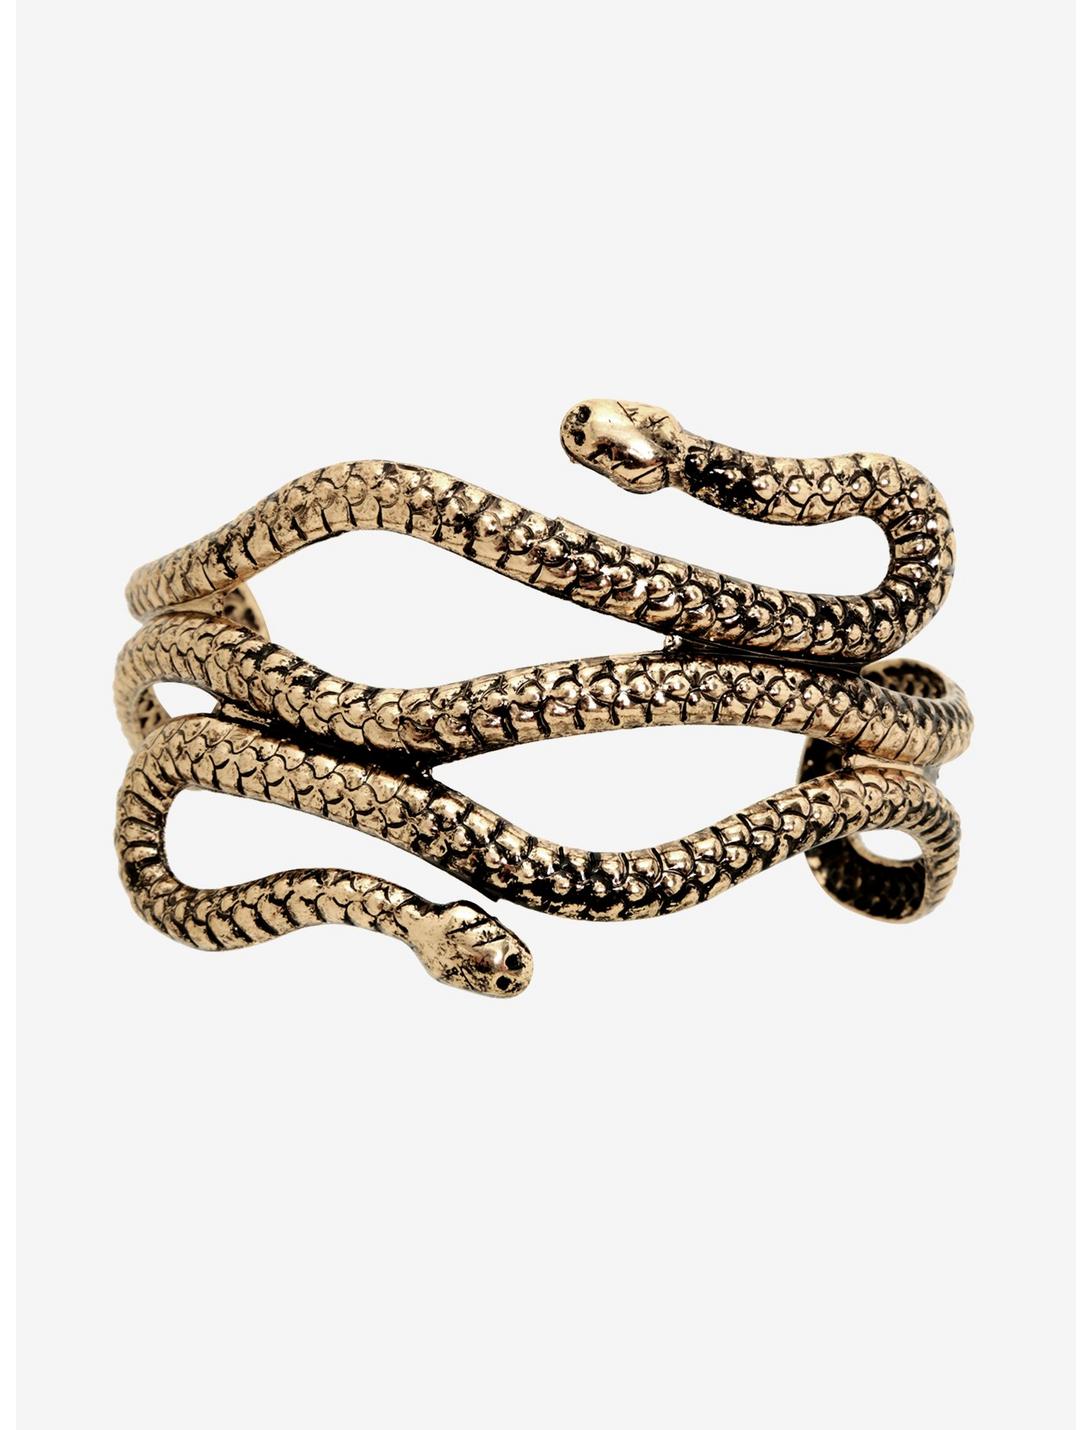 Blackheart Gold Snake Cuff Bracelet, , hi-res